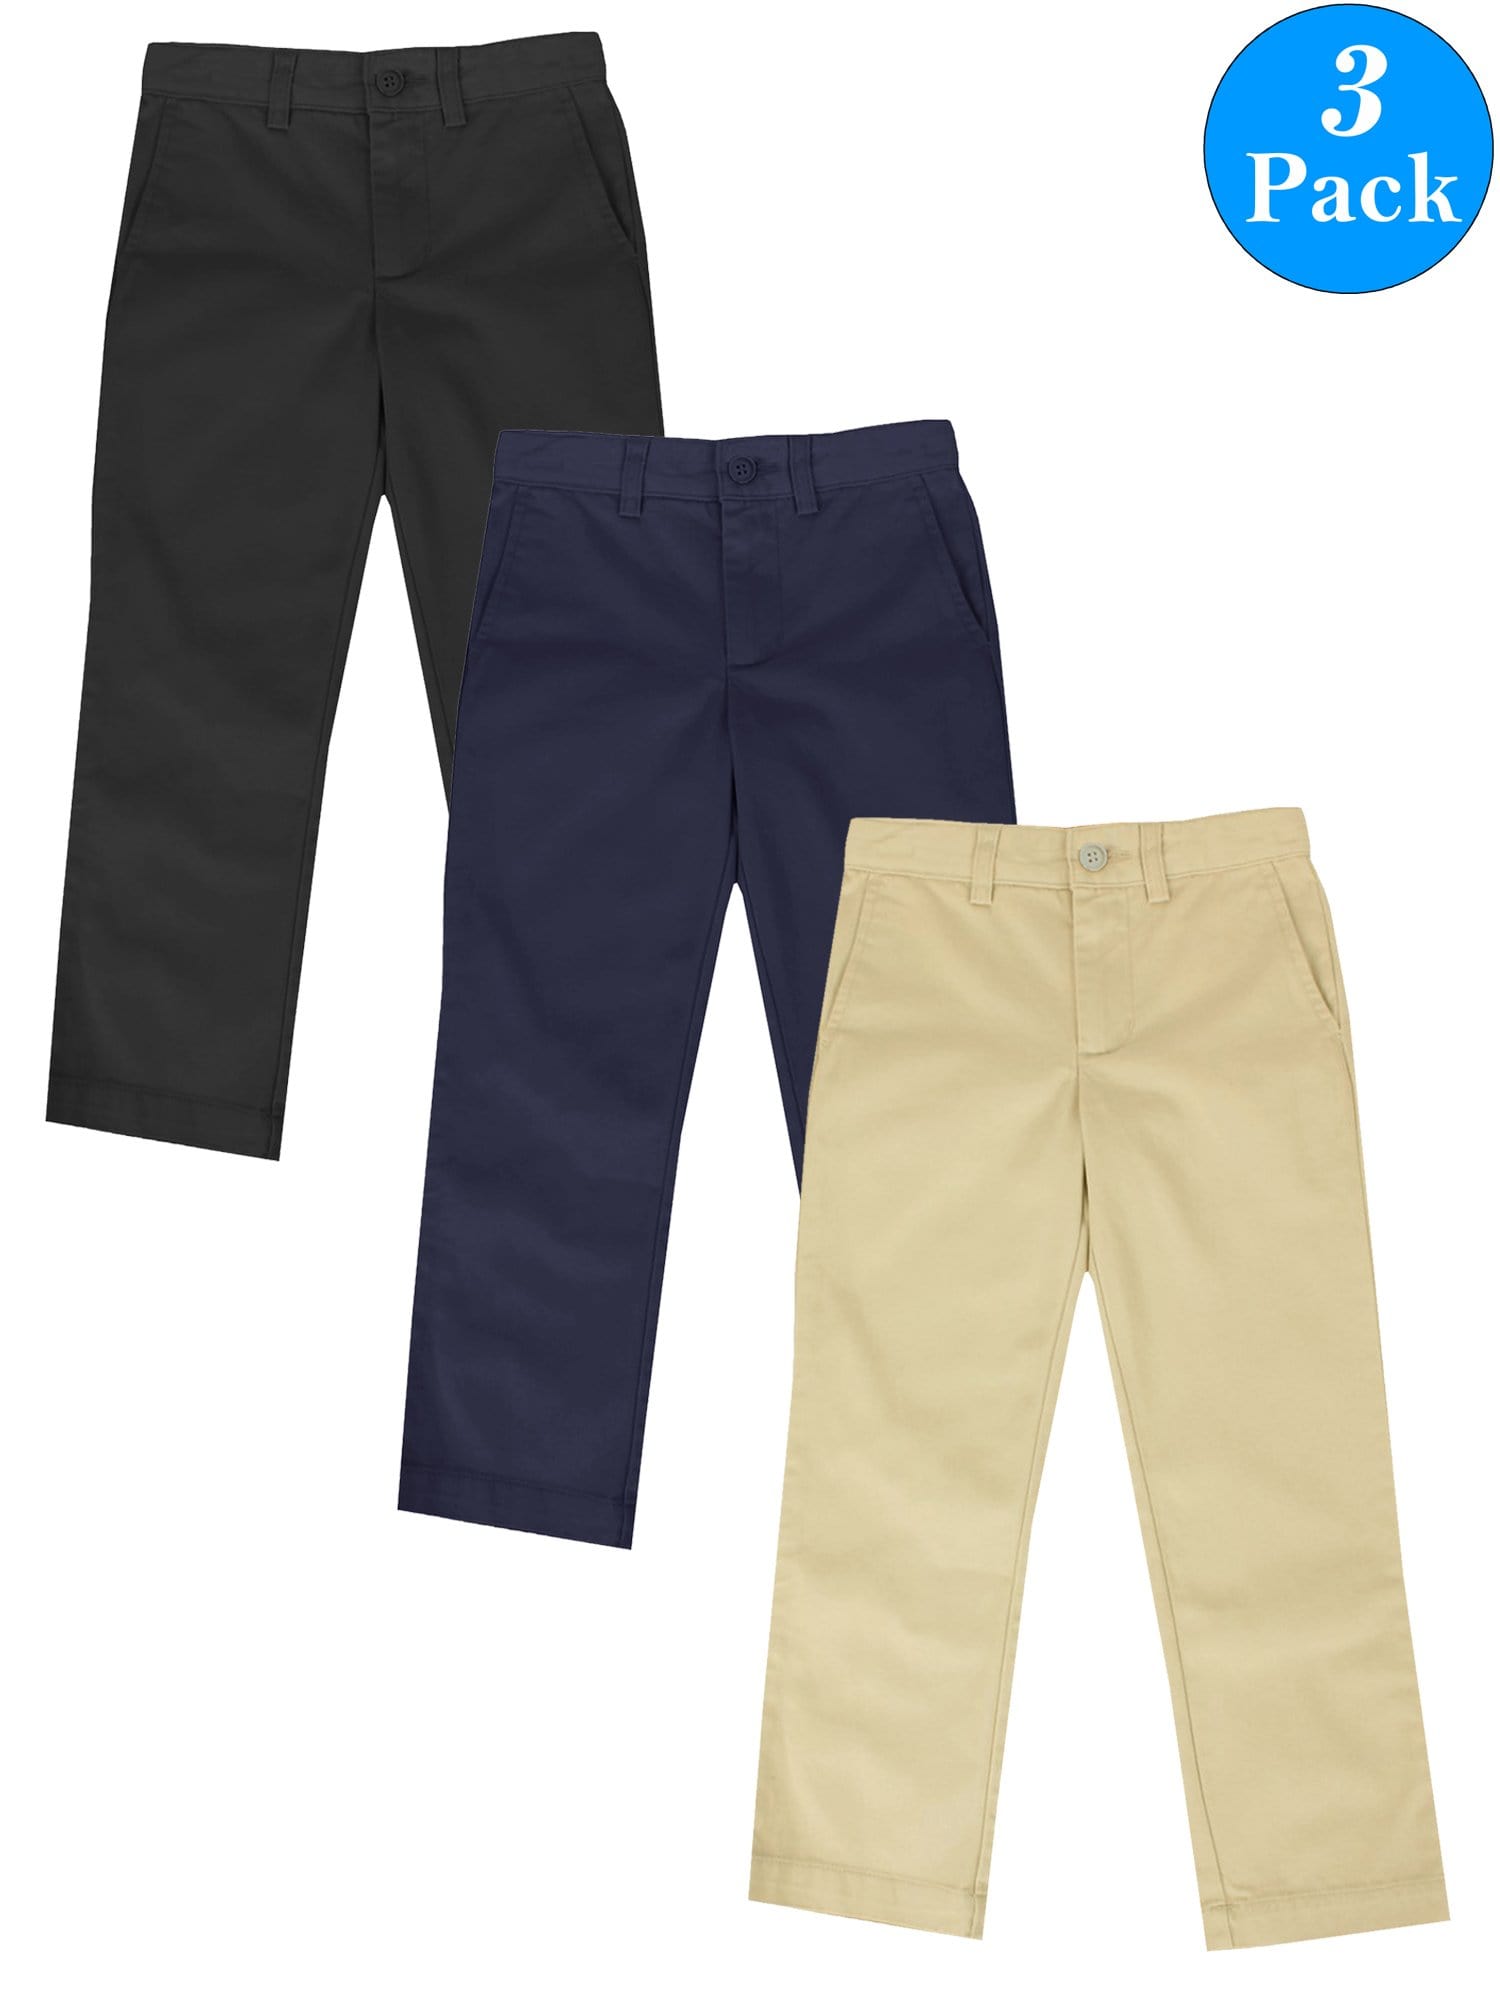 Boys (3-PACK) Classic Flat Front School Uniform Pants - Sizes 4-20